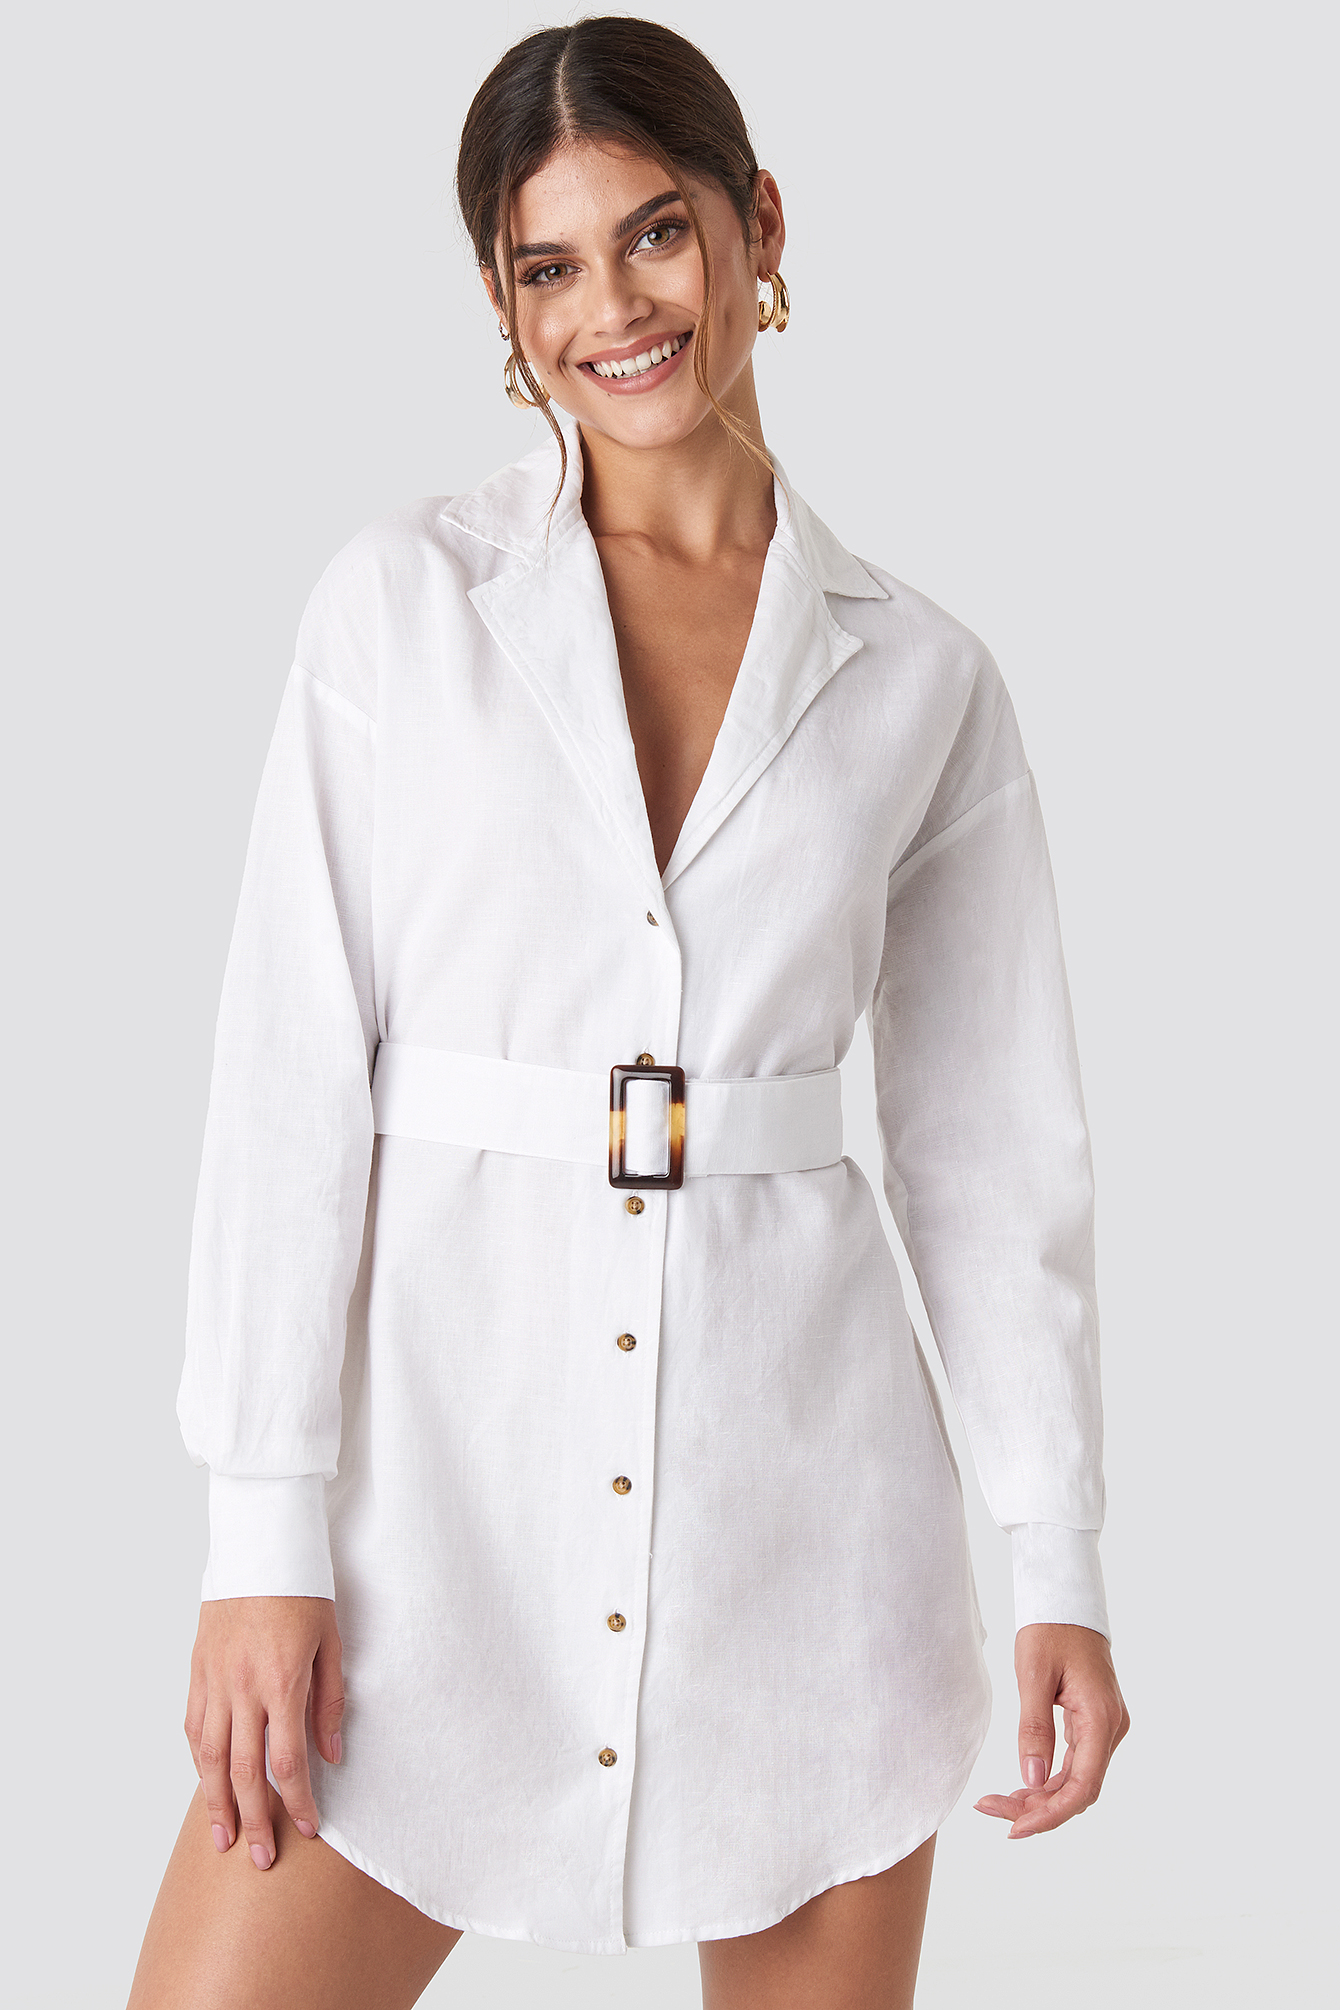 Sparen Sie 24% NA-KD Hannalicious x Belted Oversized Linen Look Shirt Dress in Weiß Damen Bekleidung Jacken Felljacken 